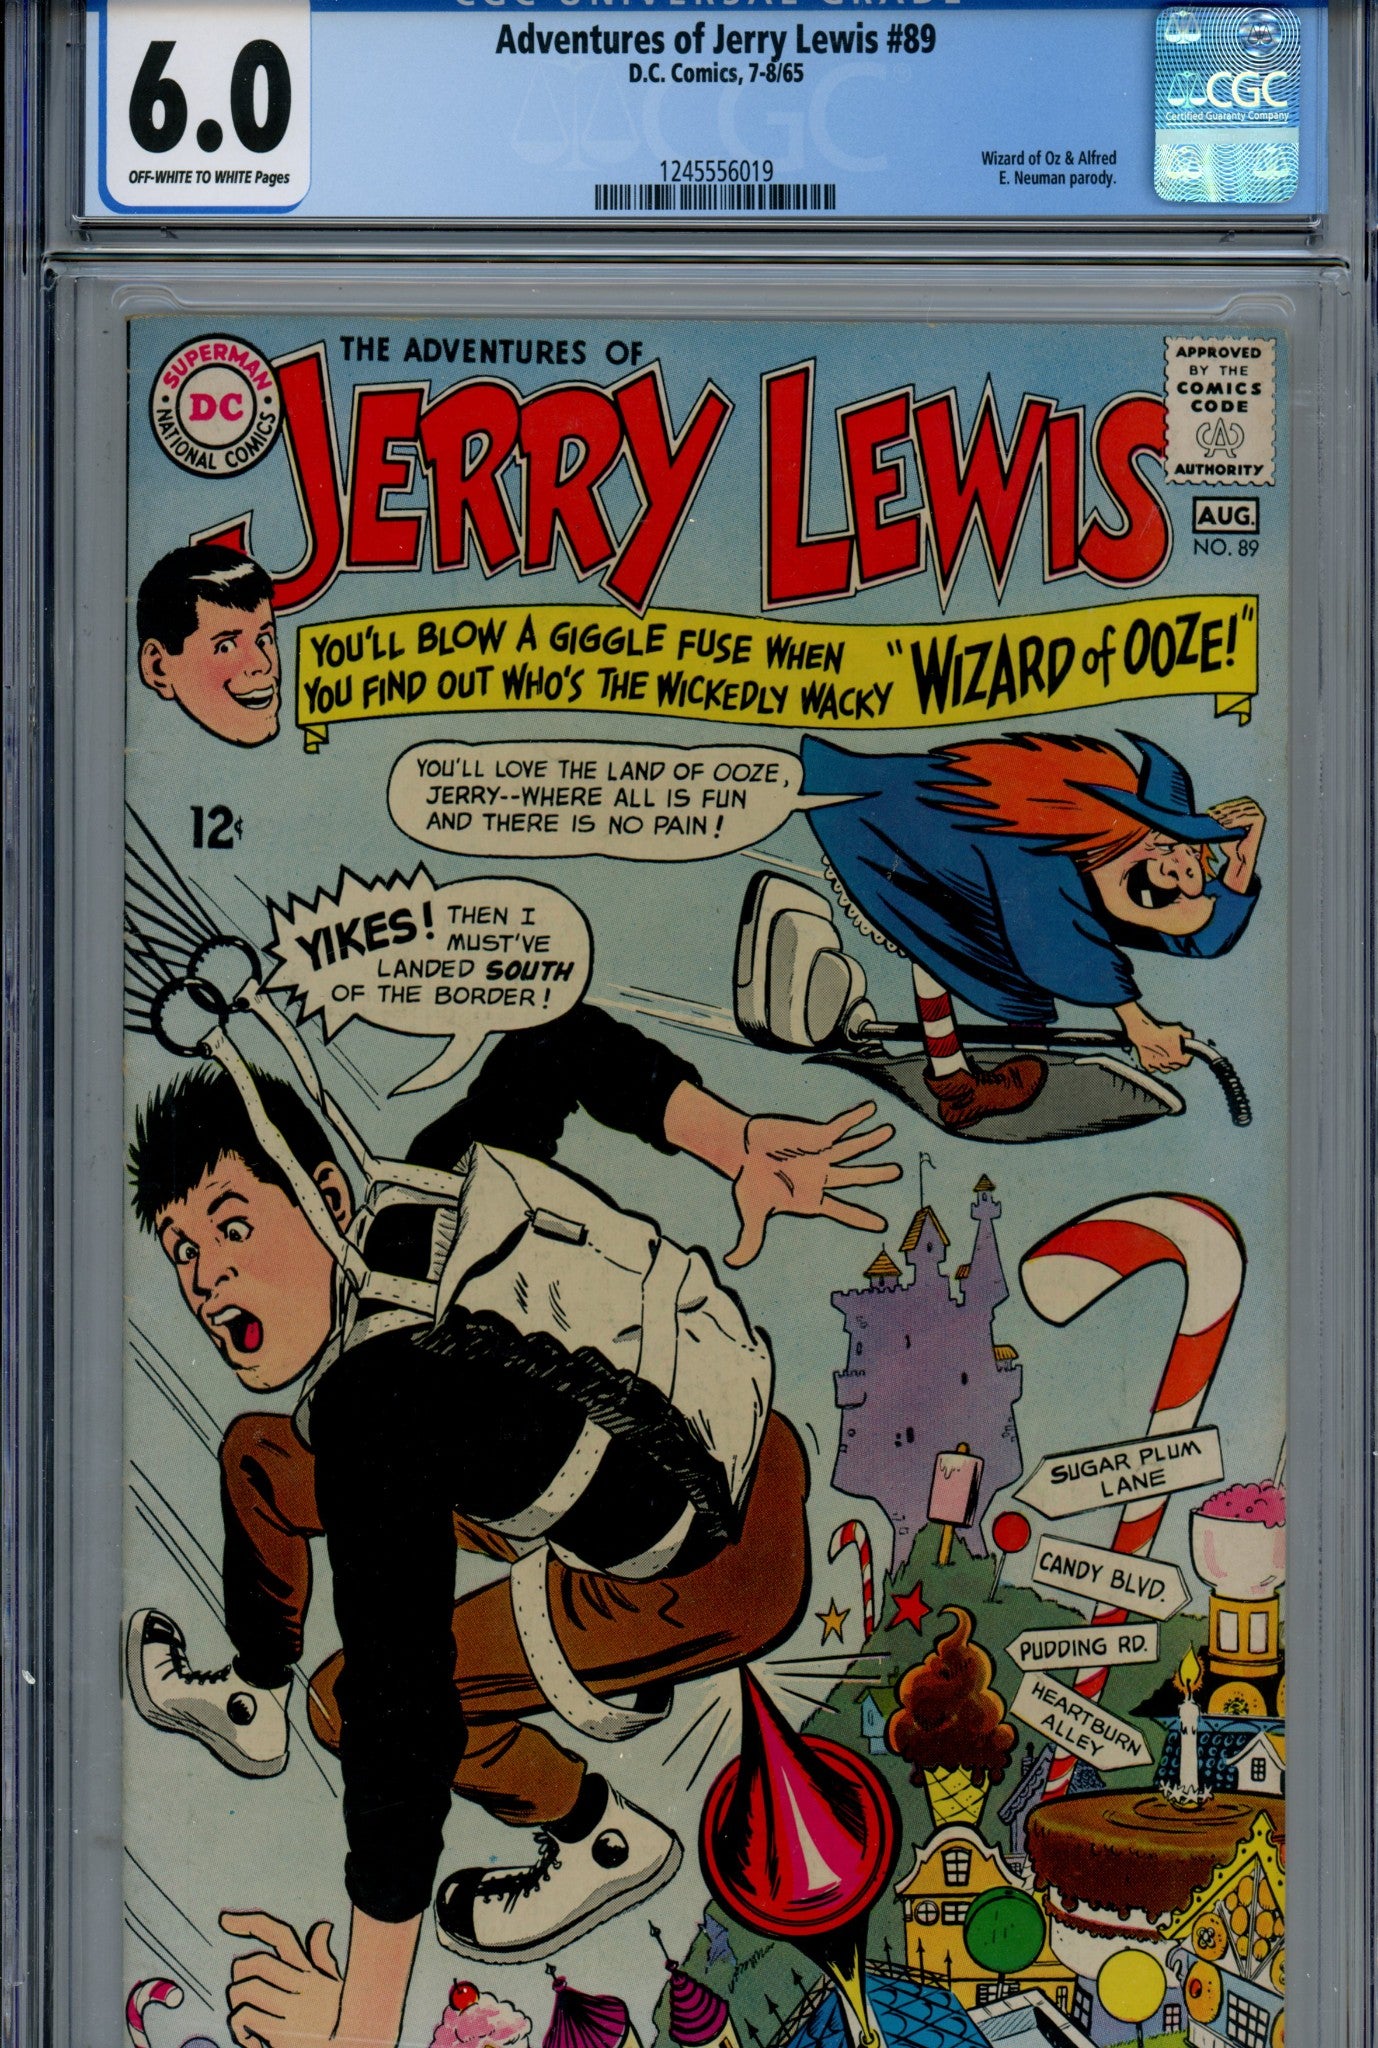 The Adventures of Jerry Lewis 89 CGC 6.0 (1965)